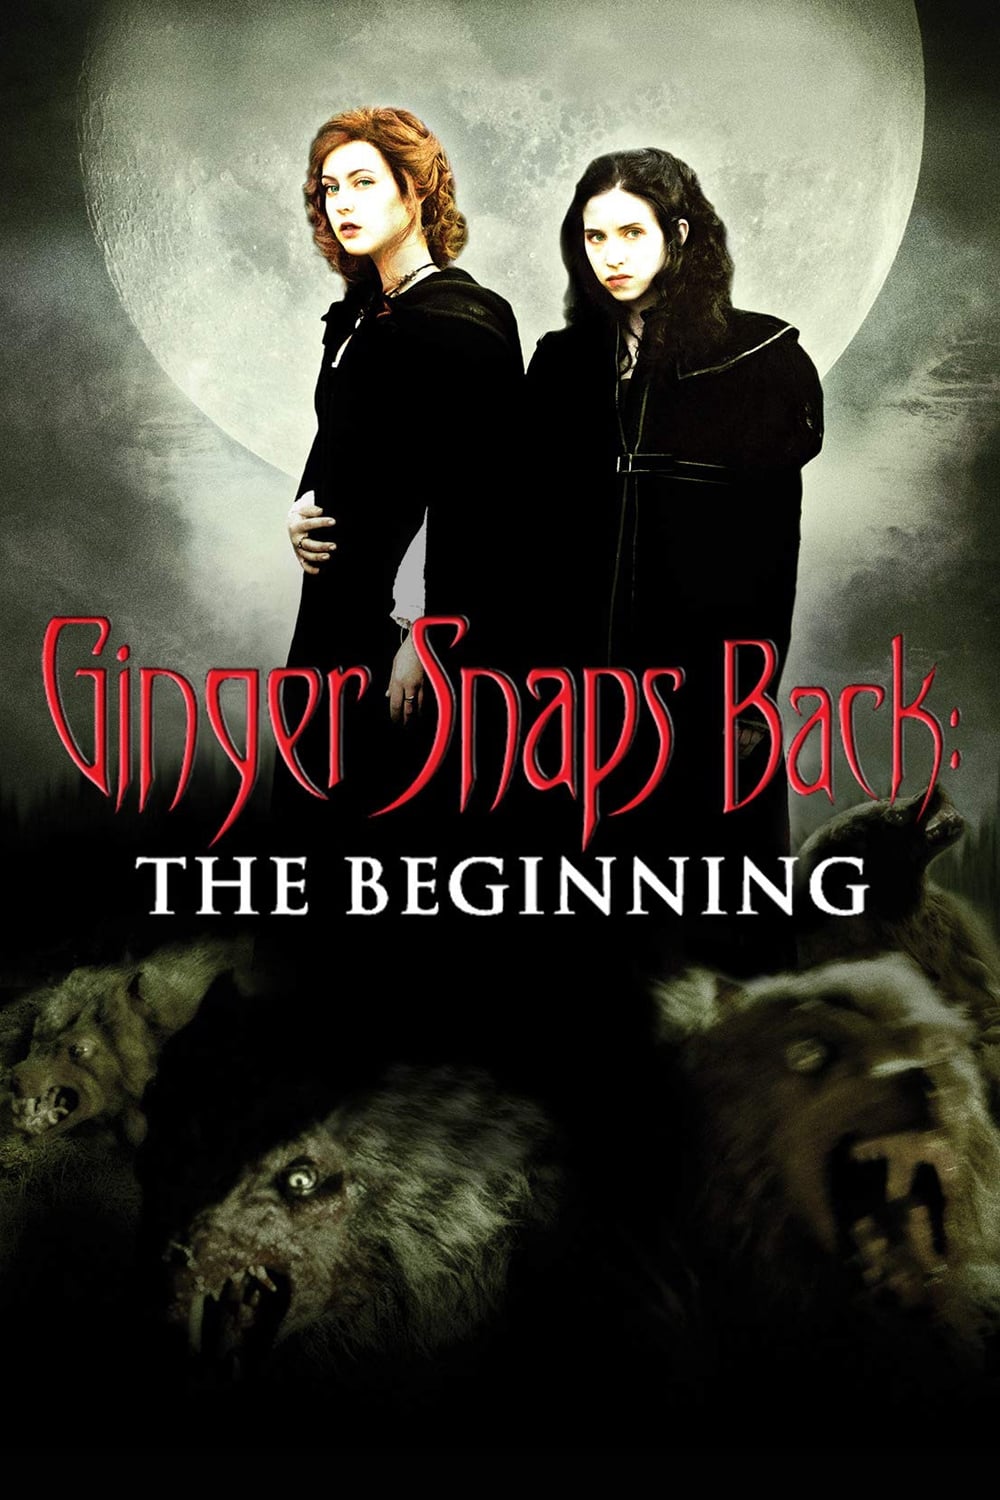 Ginger Snaps Back The Beginning (2004)